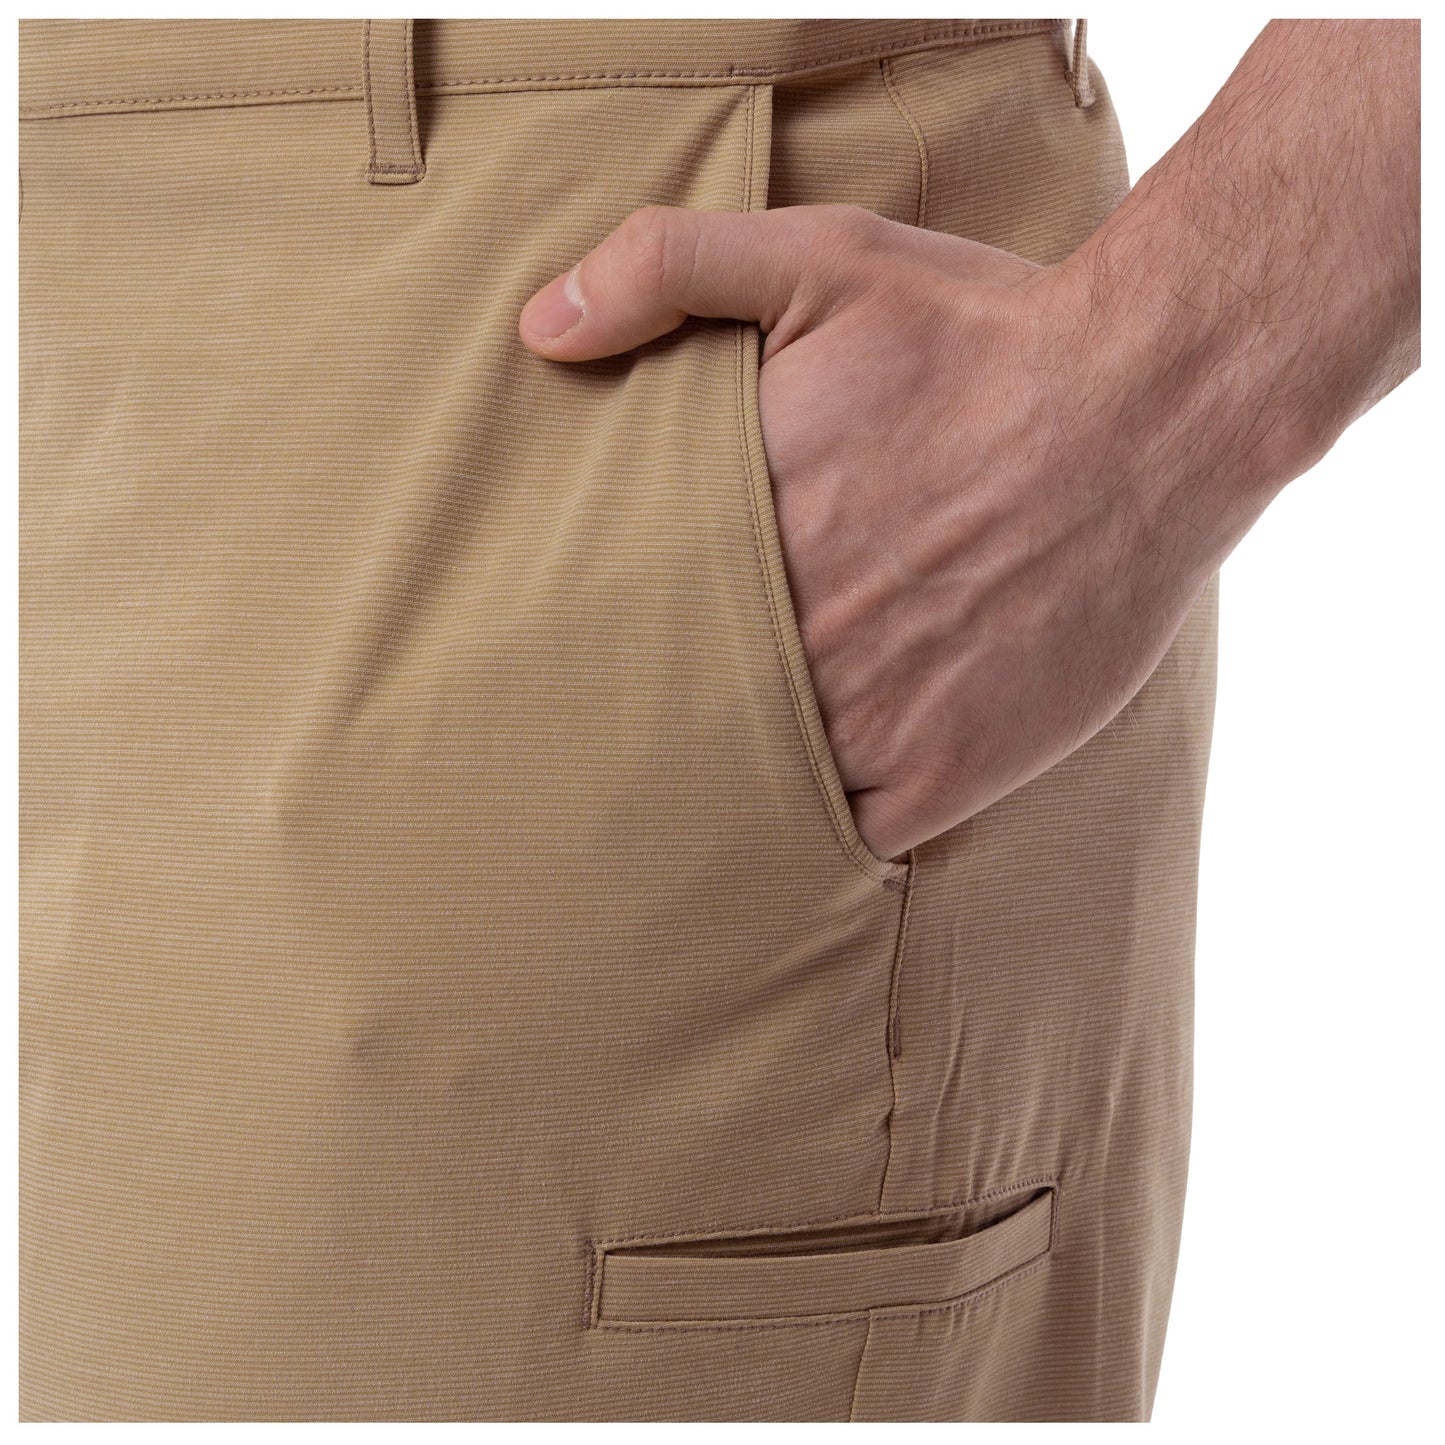 Men's Khaki Performance Hybrid Short 4-Way Stretch View 4